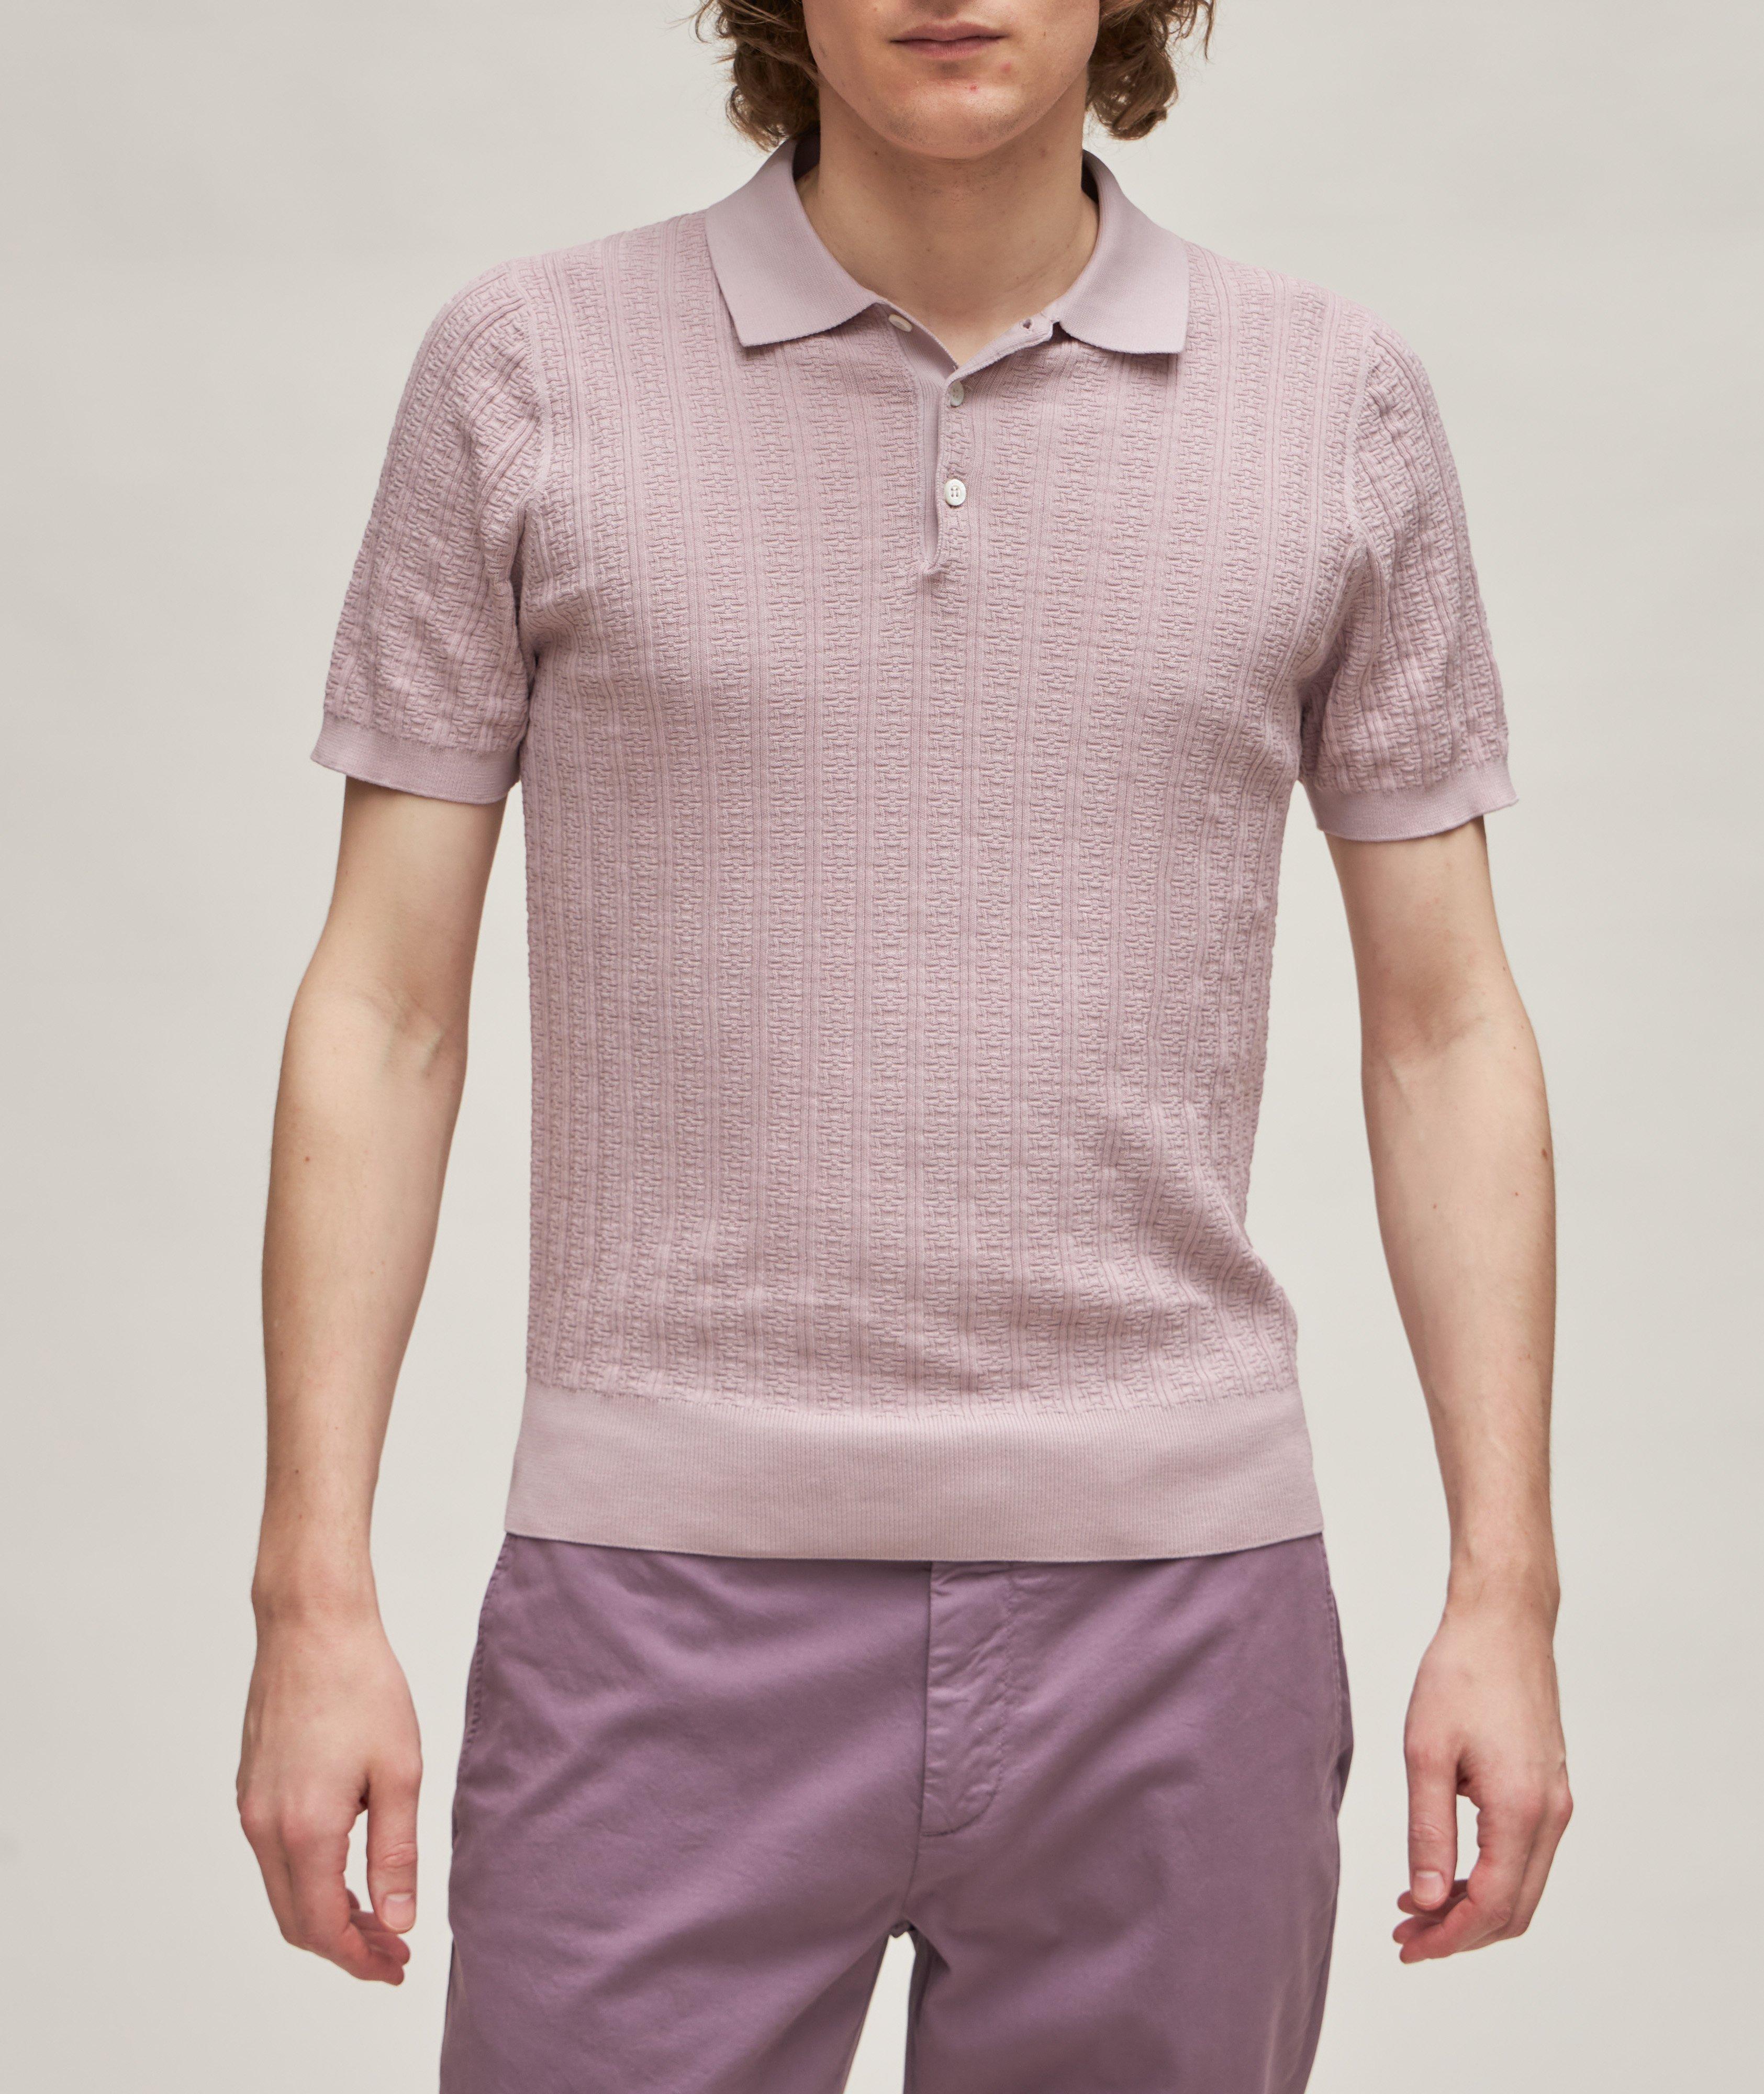 Geometric Textured Woven Cotton Polo image 1